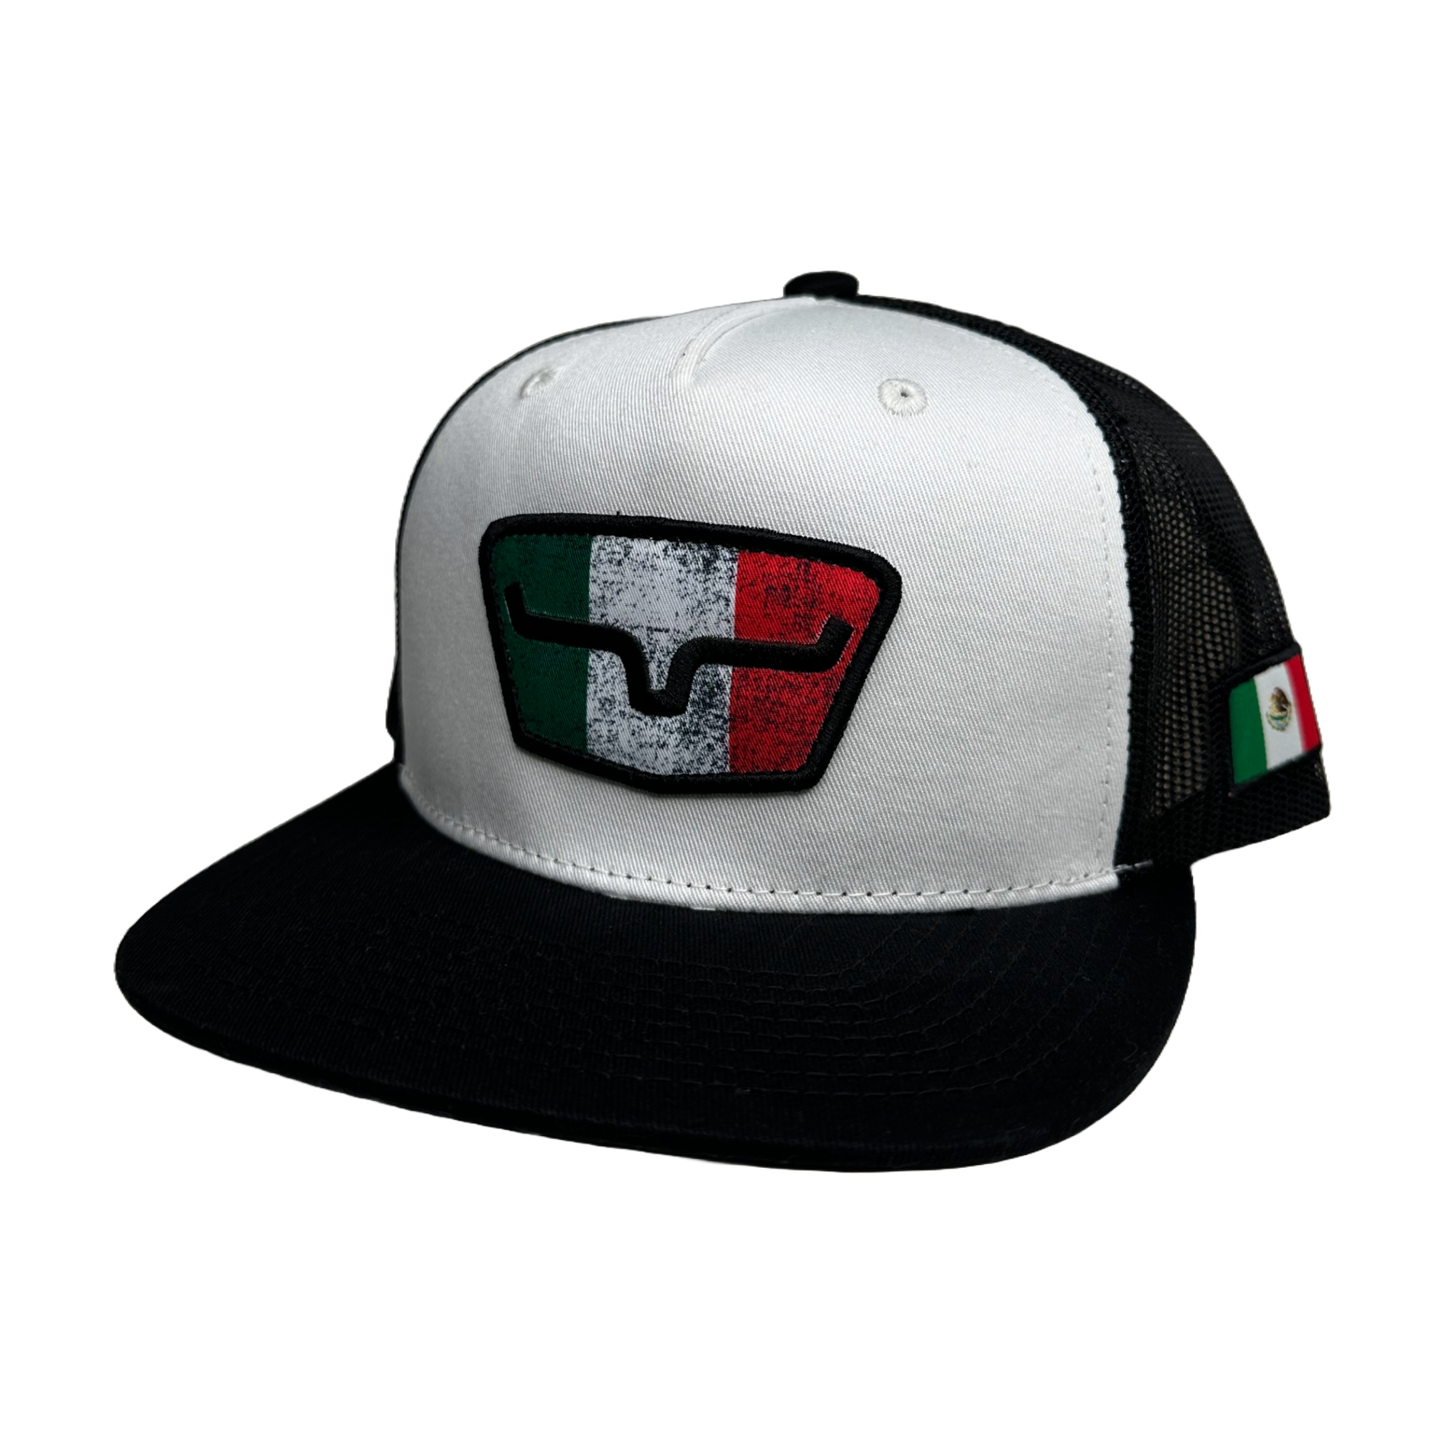 Kimes Ranch Mexico Flag Black & White Black Snap Back Hat UHA0000143-BW